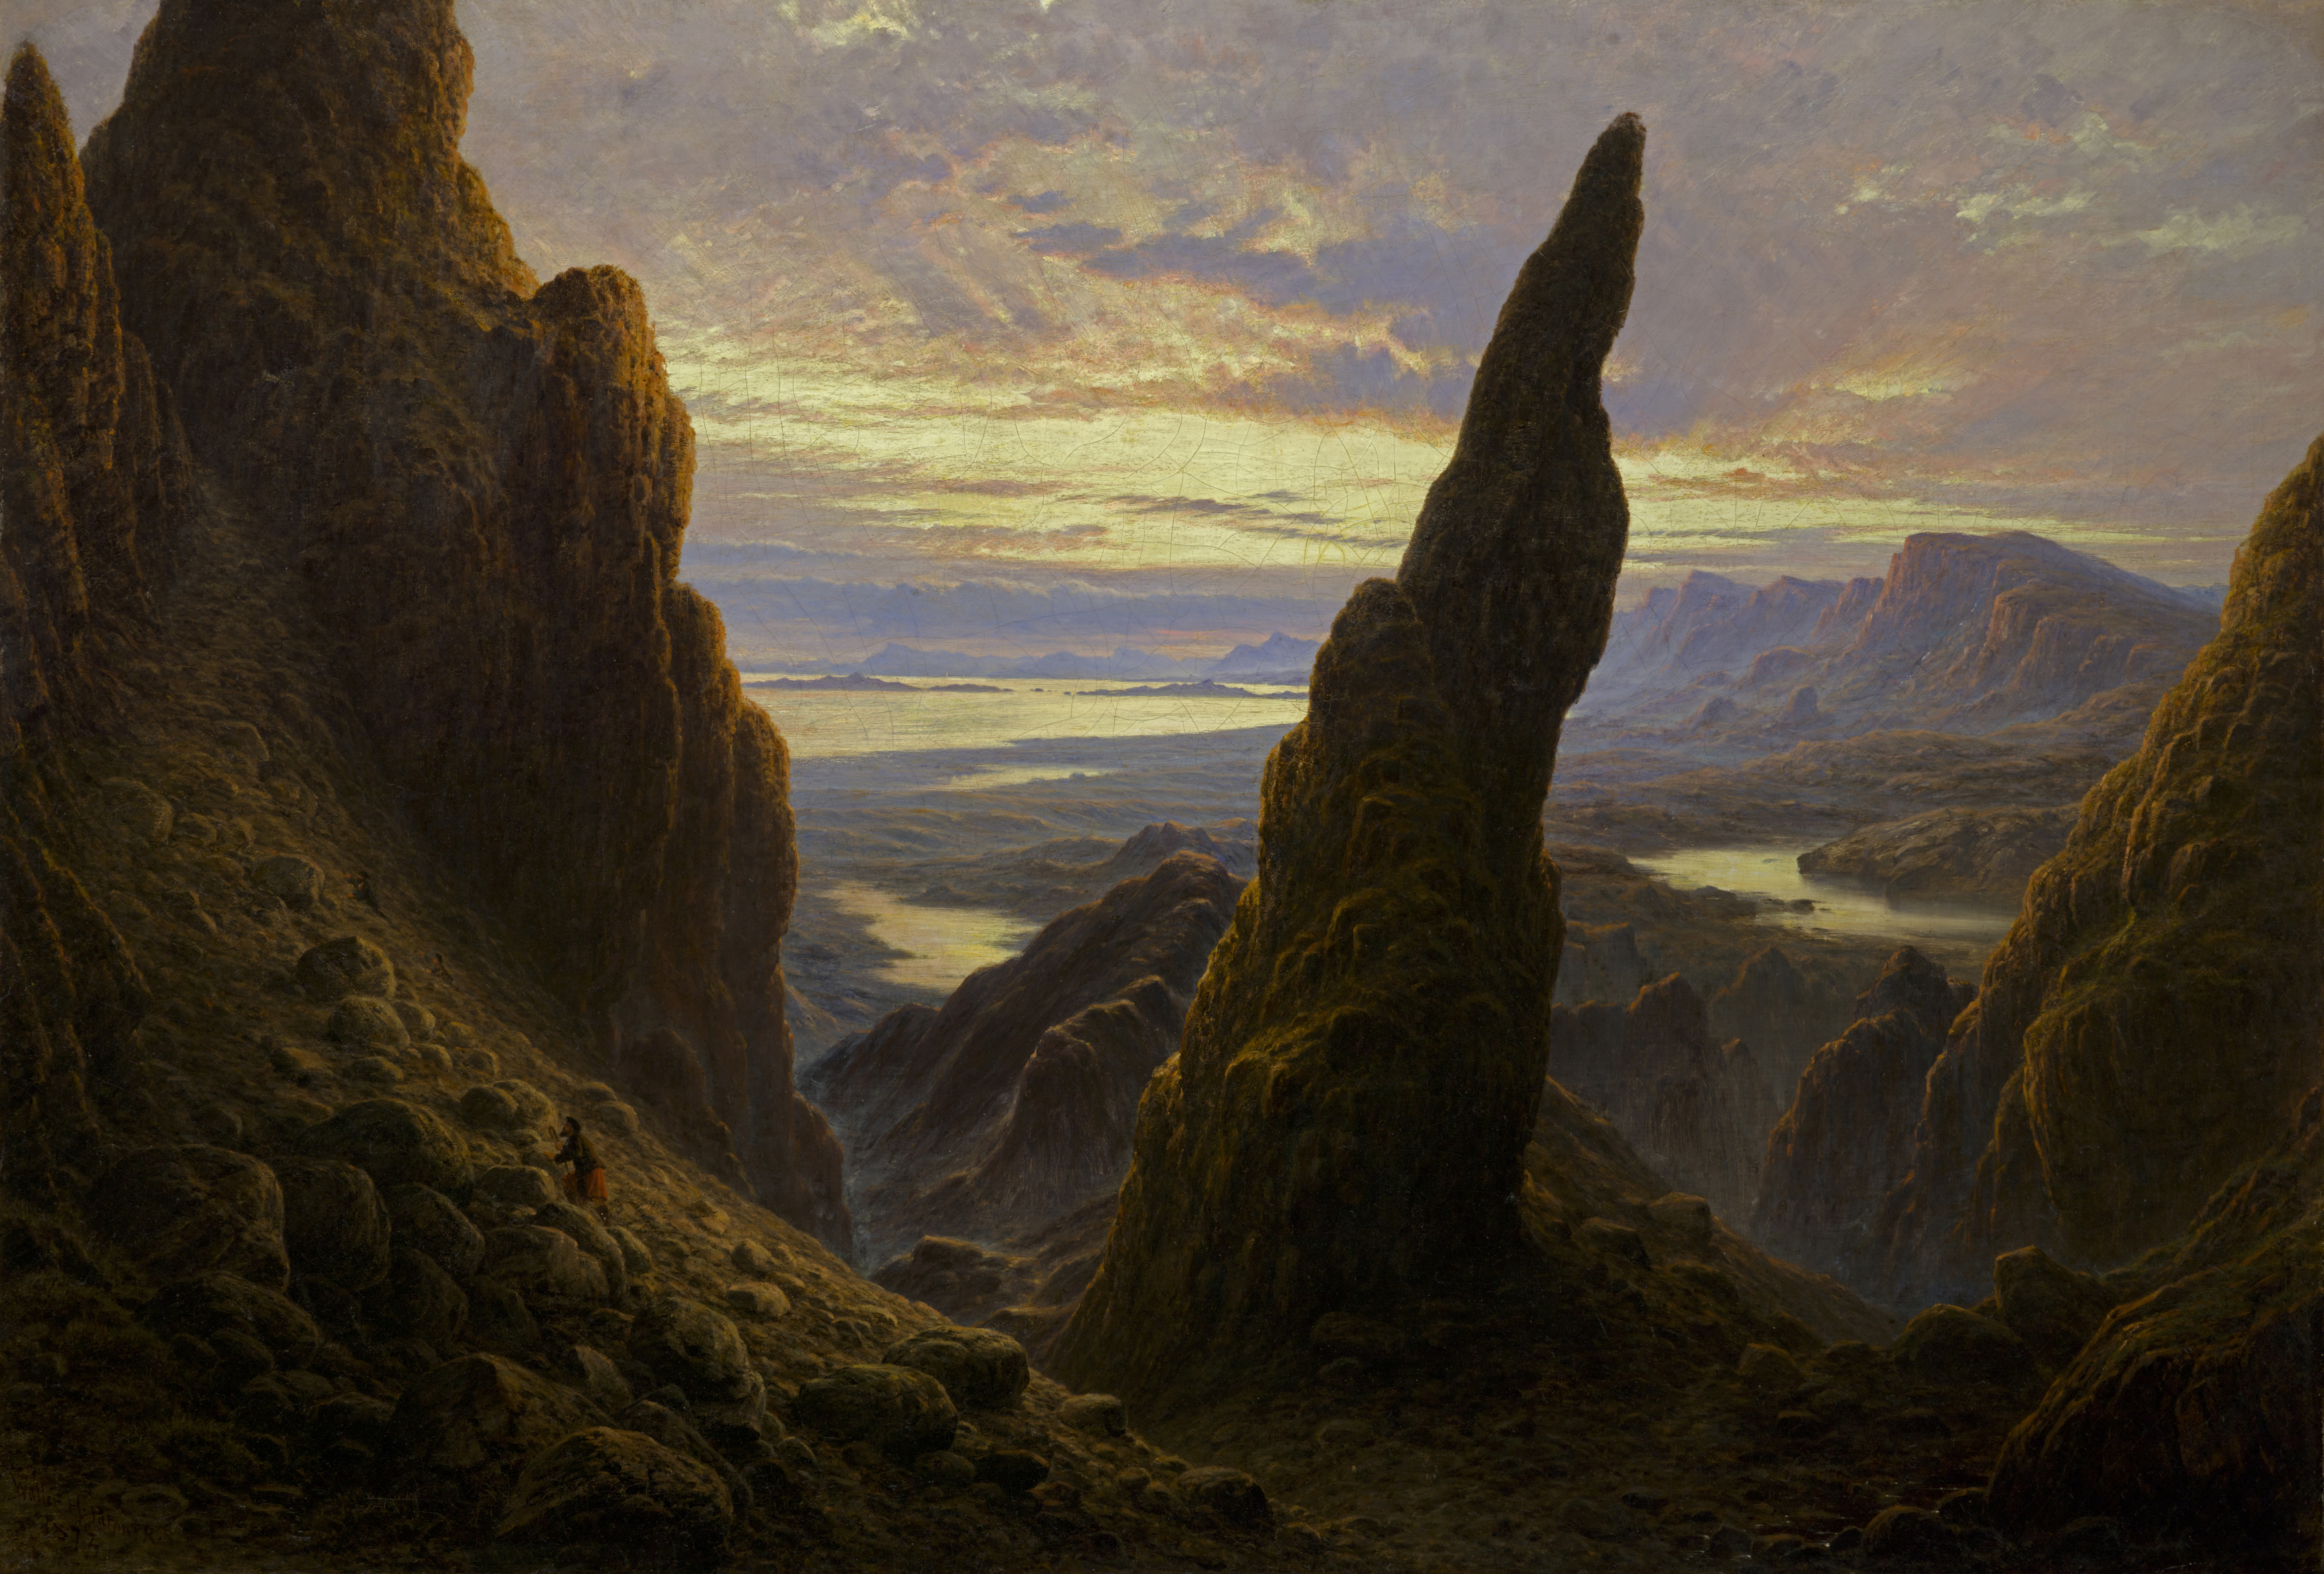 A Quiraing bejárata, Skye by Waller Hugh Paton - 1873 - 111.8 x 162.6 cm 